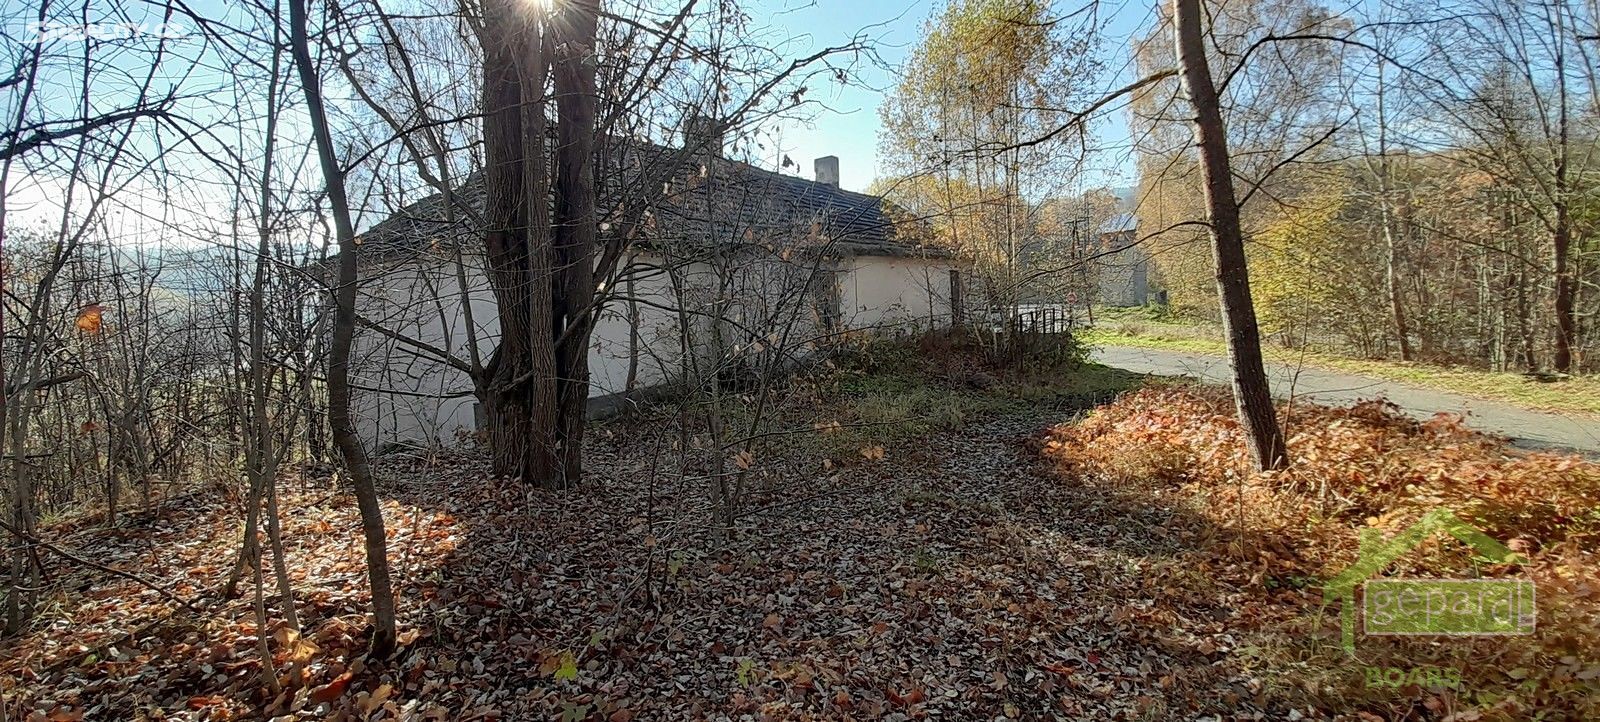 Prodej  rodinného domu 120 m², pozemek 2 139 m², Kájov - Boletice, okres Český Krumlov